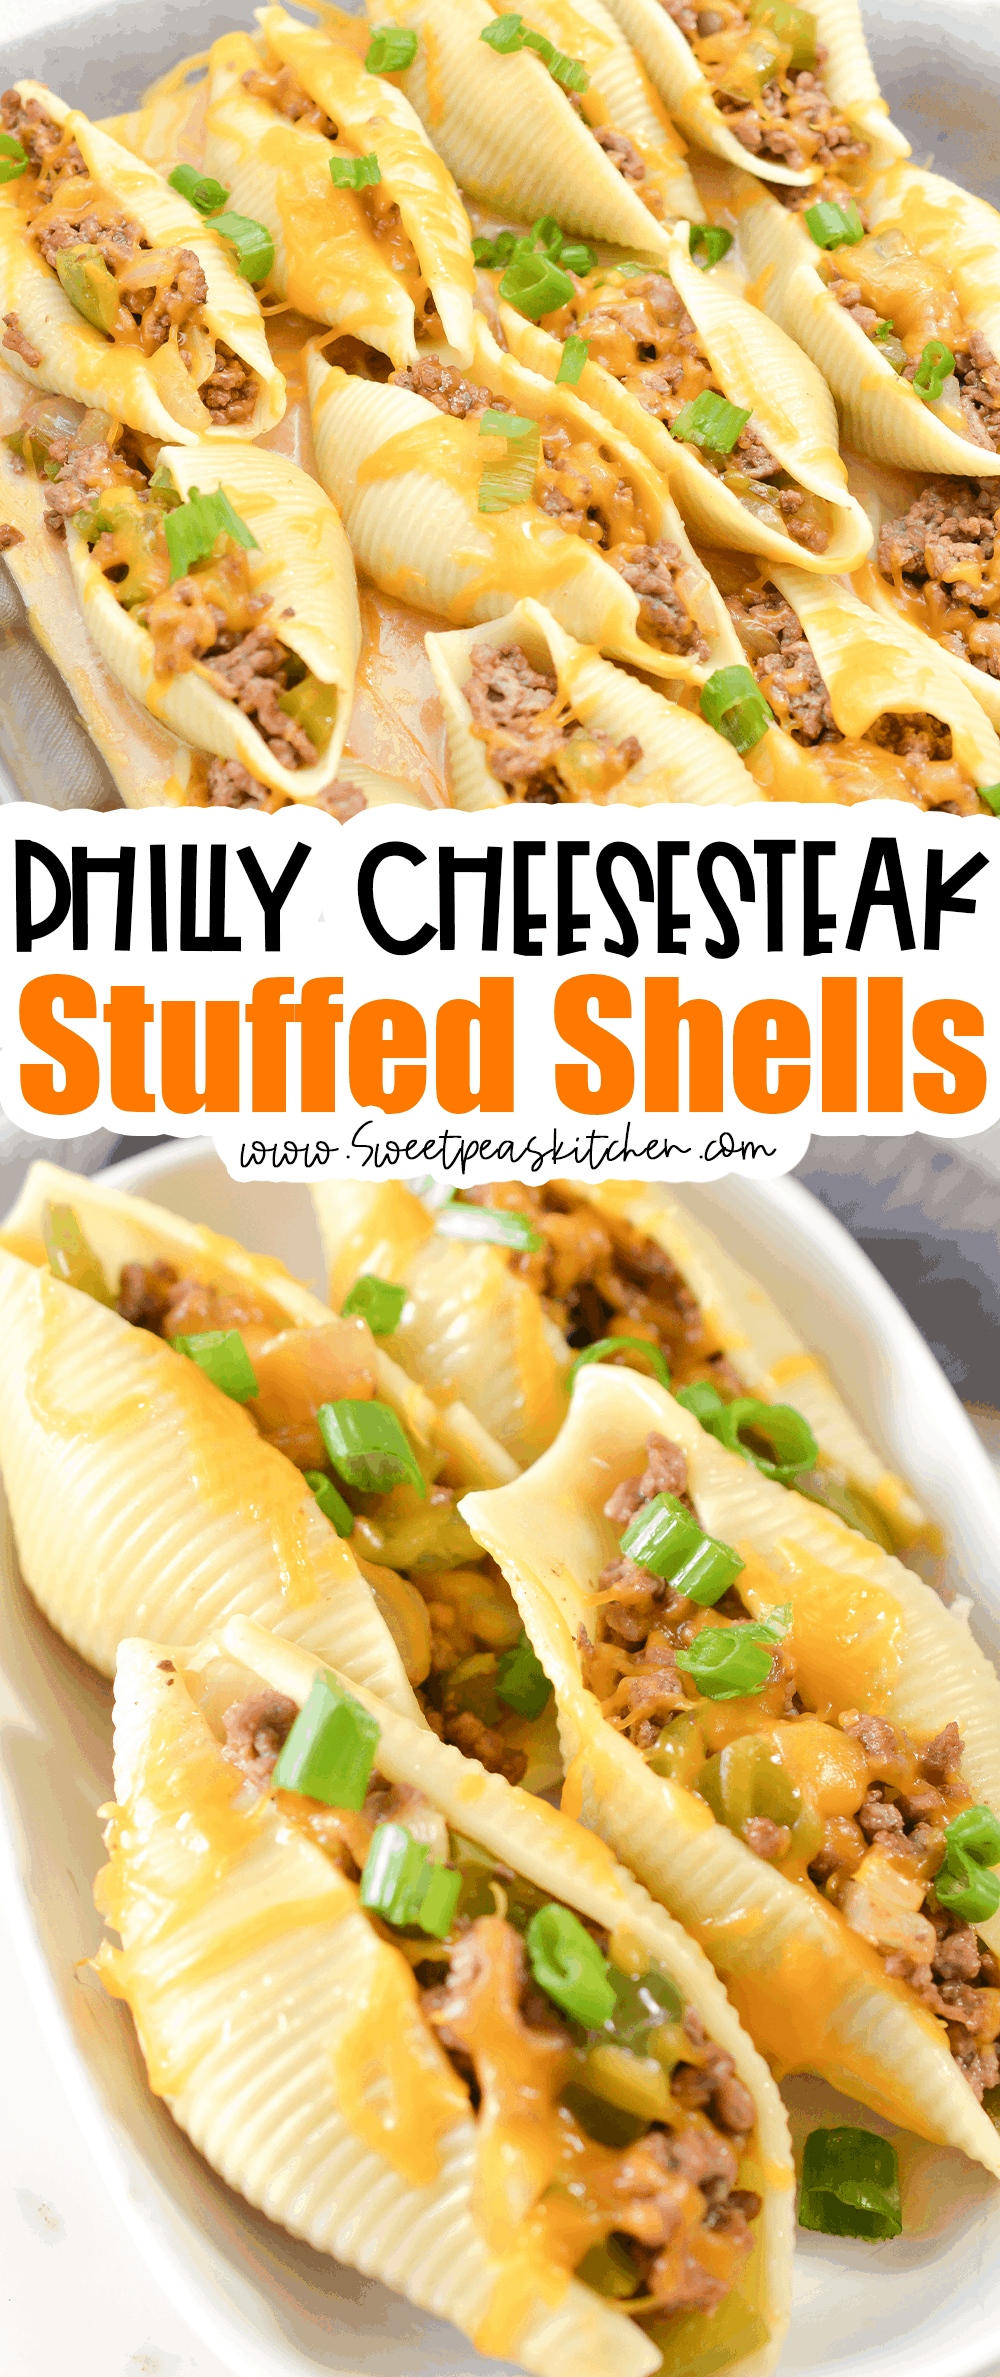 Philly Cheesesteak Stuffed Shells